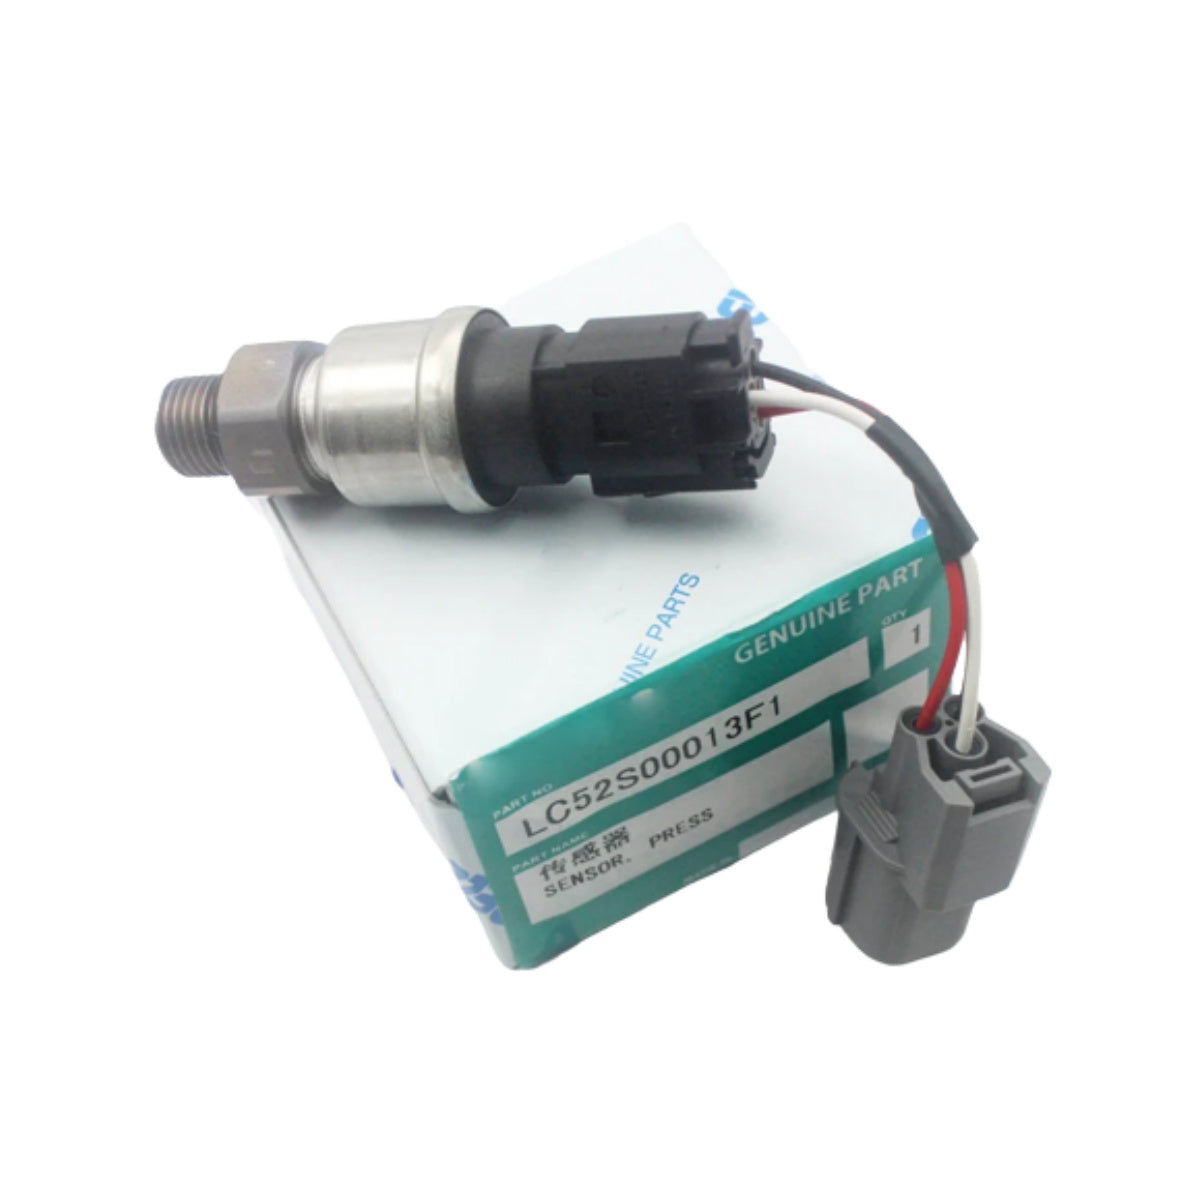 LC52S000013F1 Low Pressure Sensor for Kobelco SK200-6E 200-8 Excavator - Sinocmp